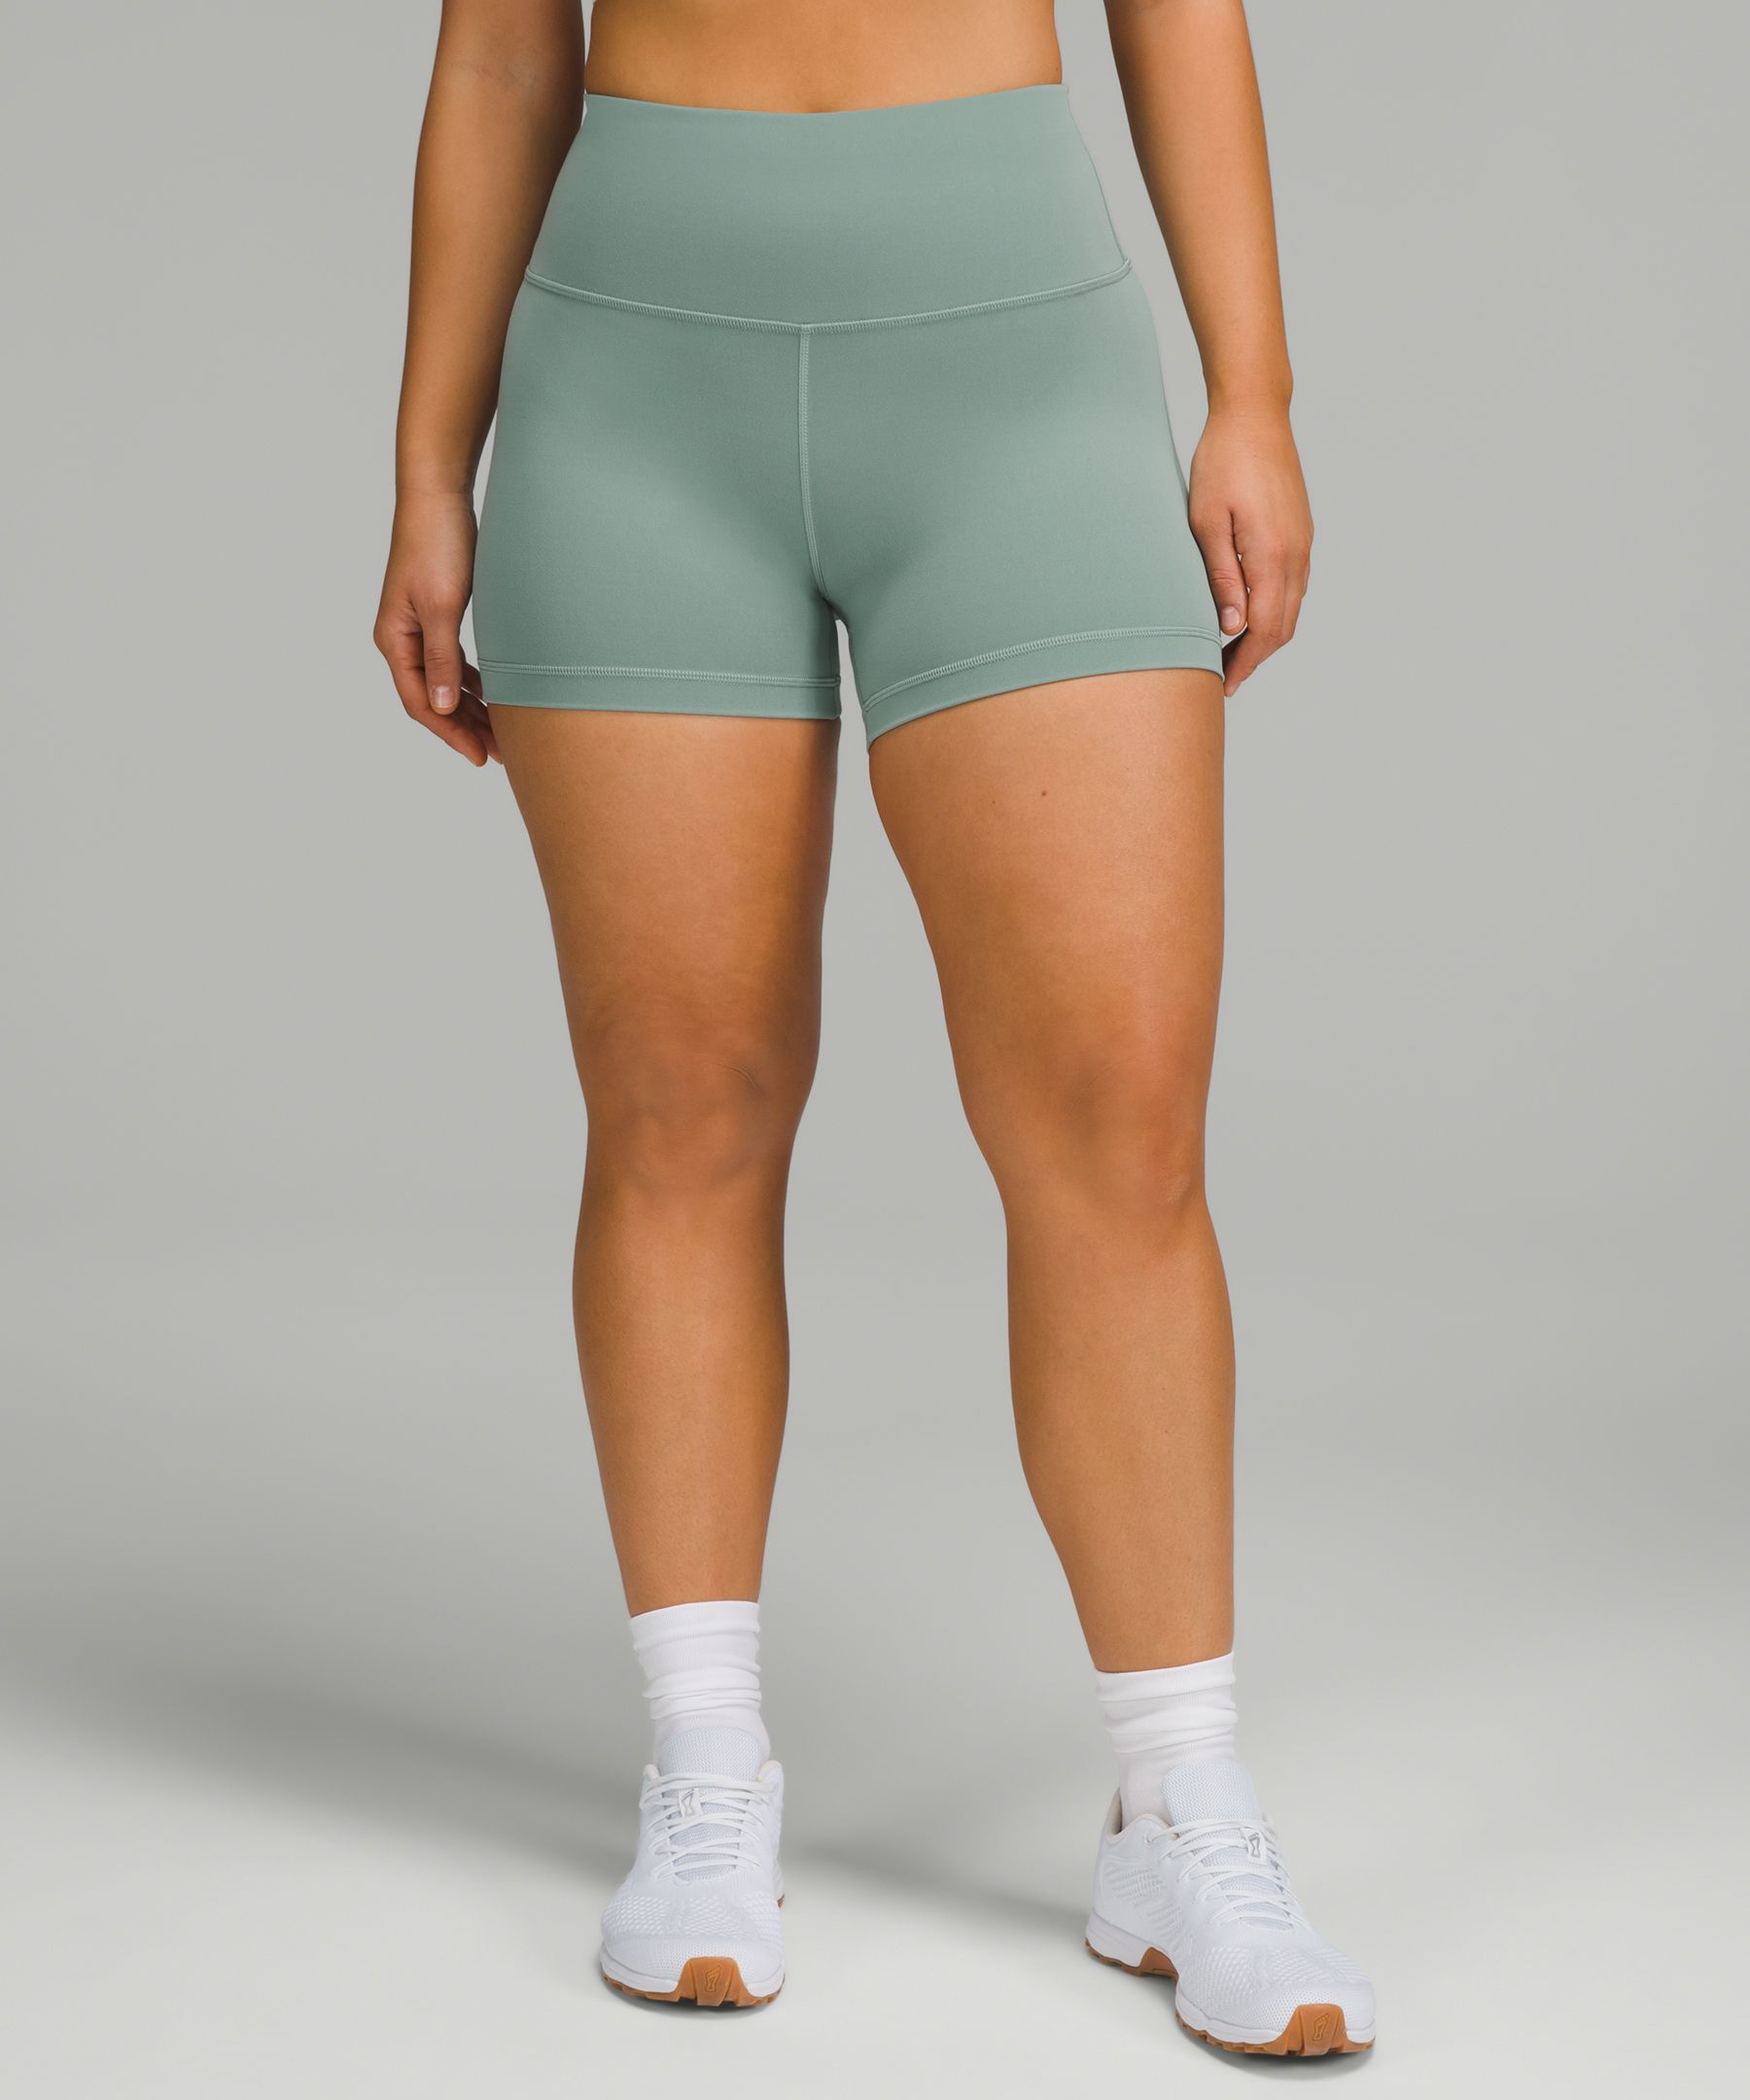 Lululemon athletica Wunder Train Contour Fit High-Rise Short 8 Online Only, Women's Shorts